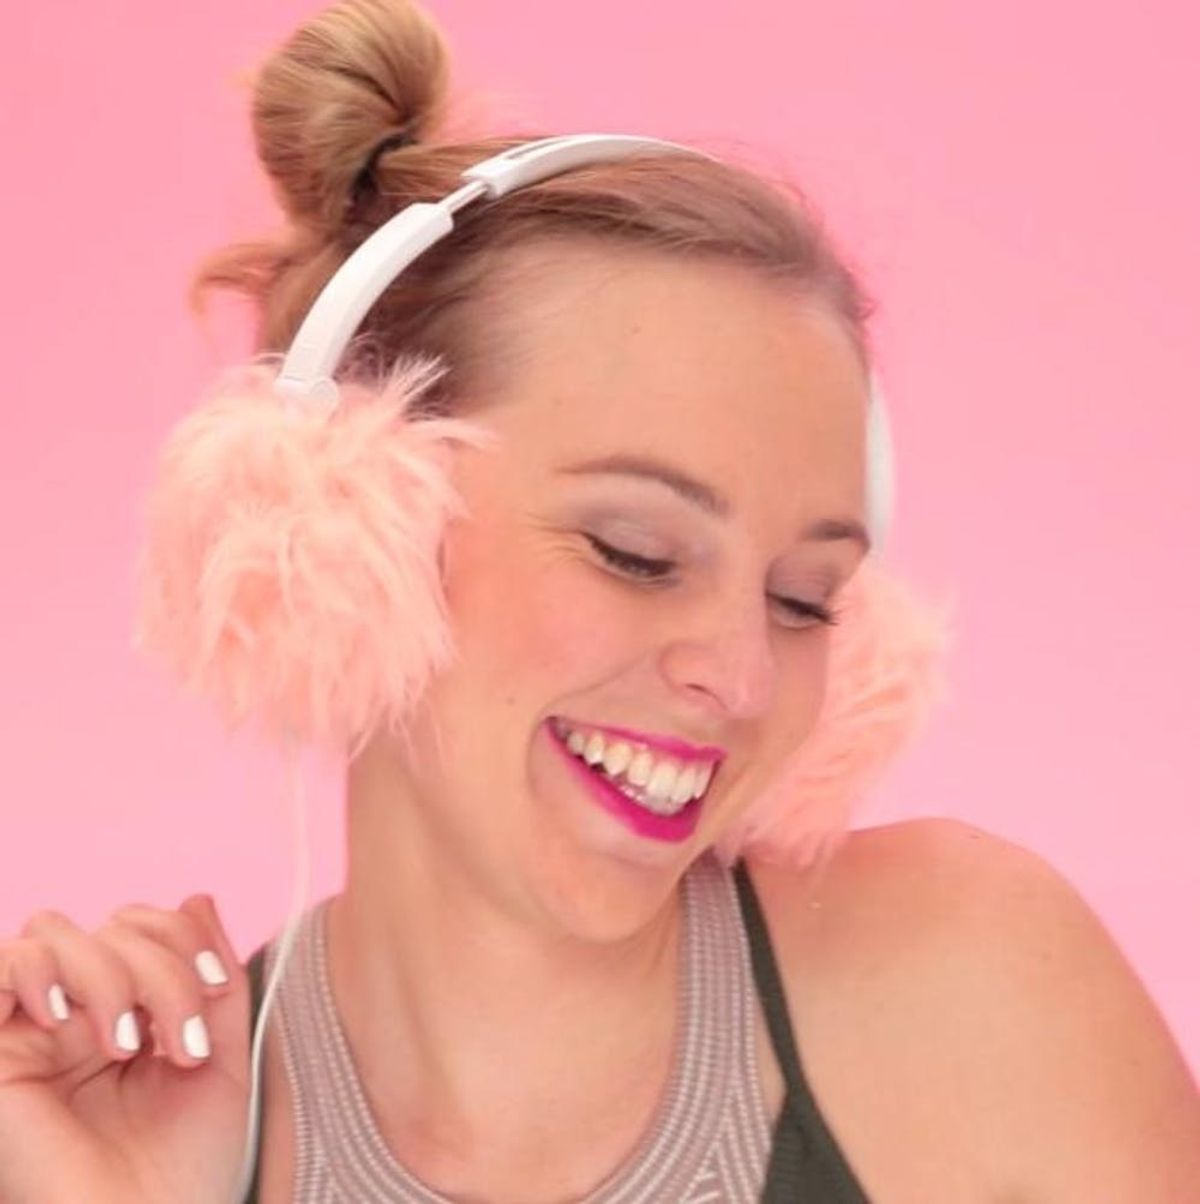 How to DIY Ear Muff Headphones